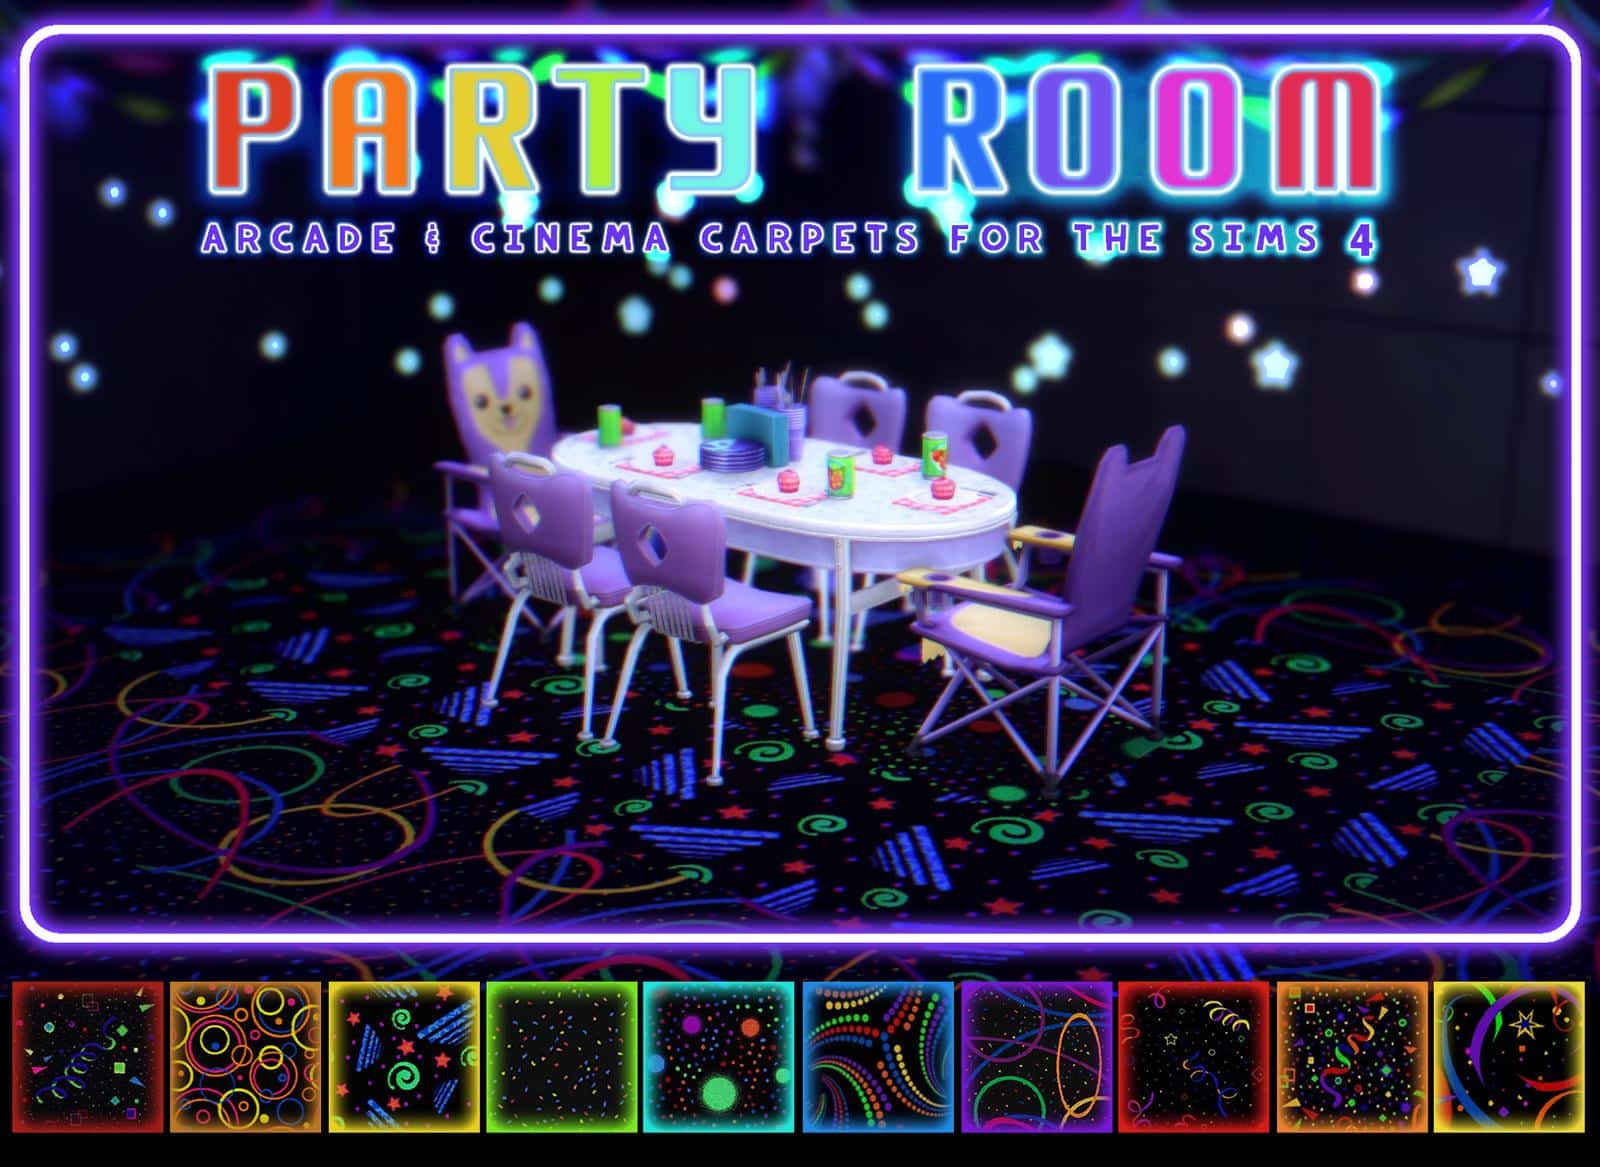 Party Room - Ten Arcade and Cinema Carpets